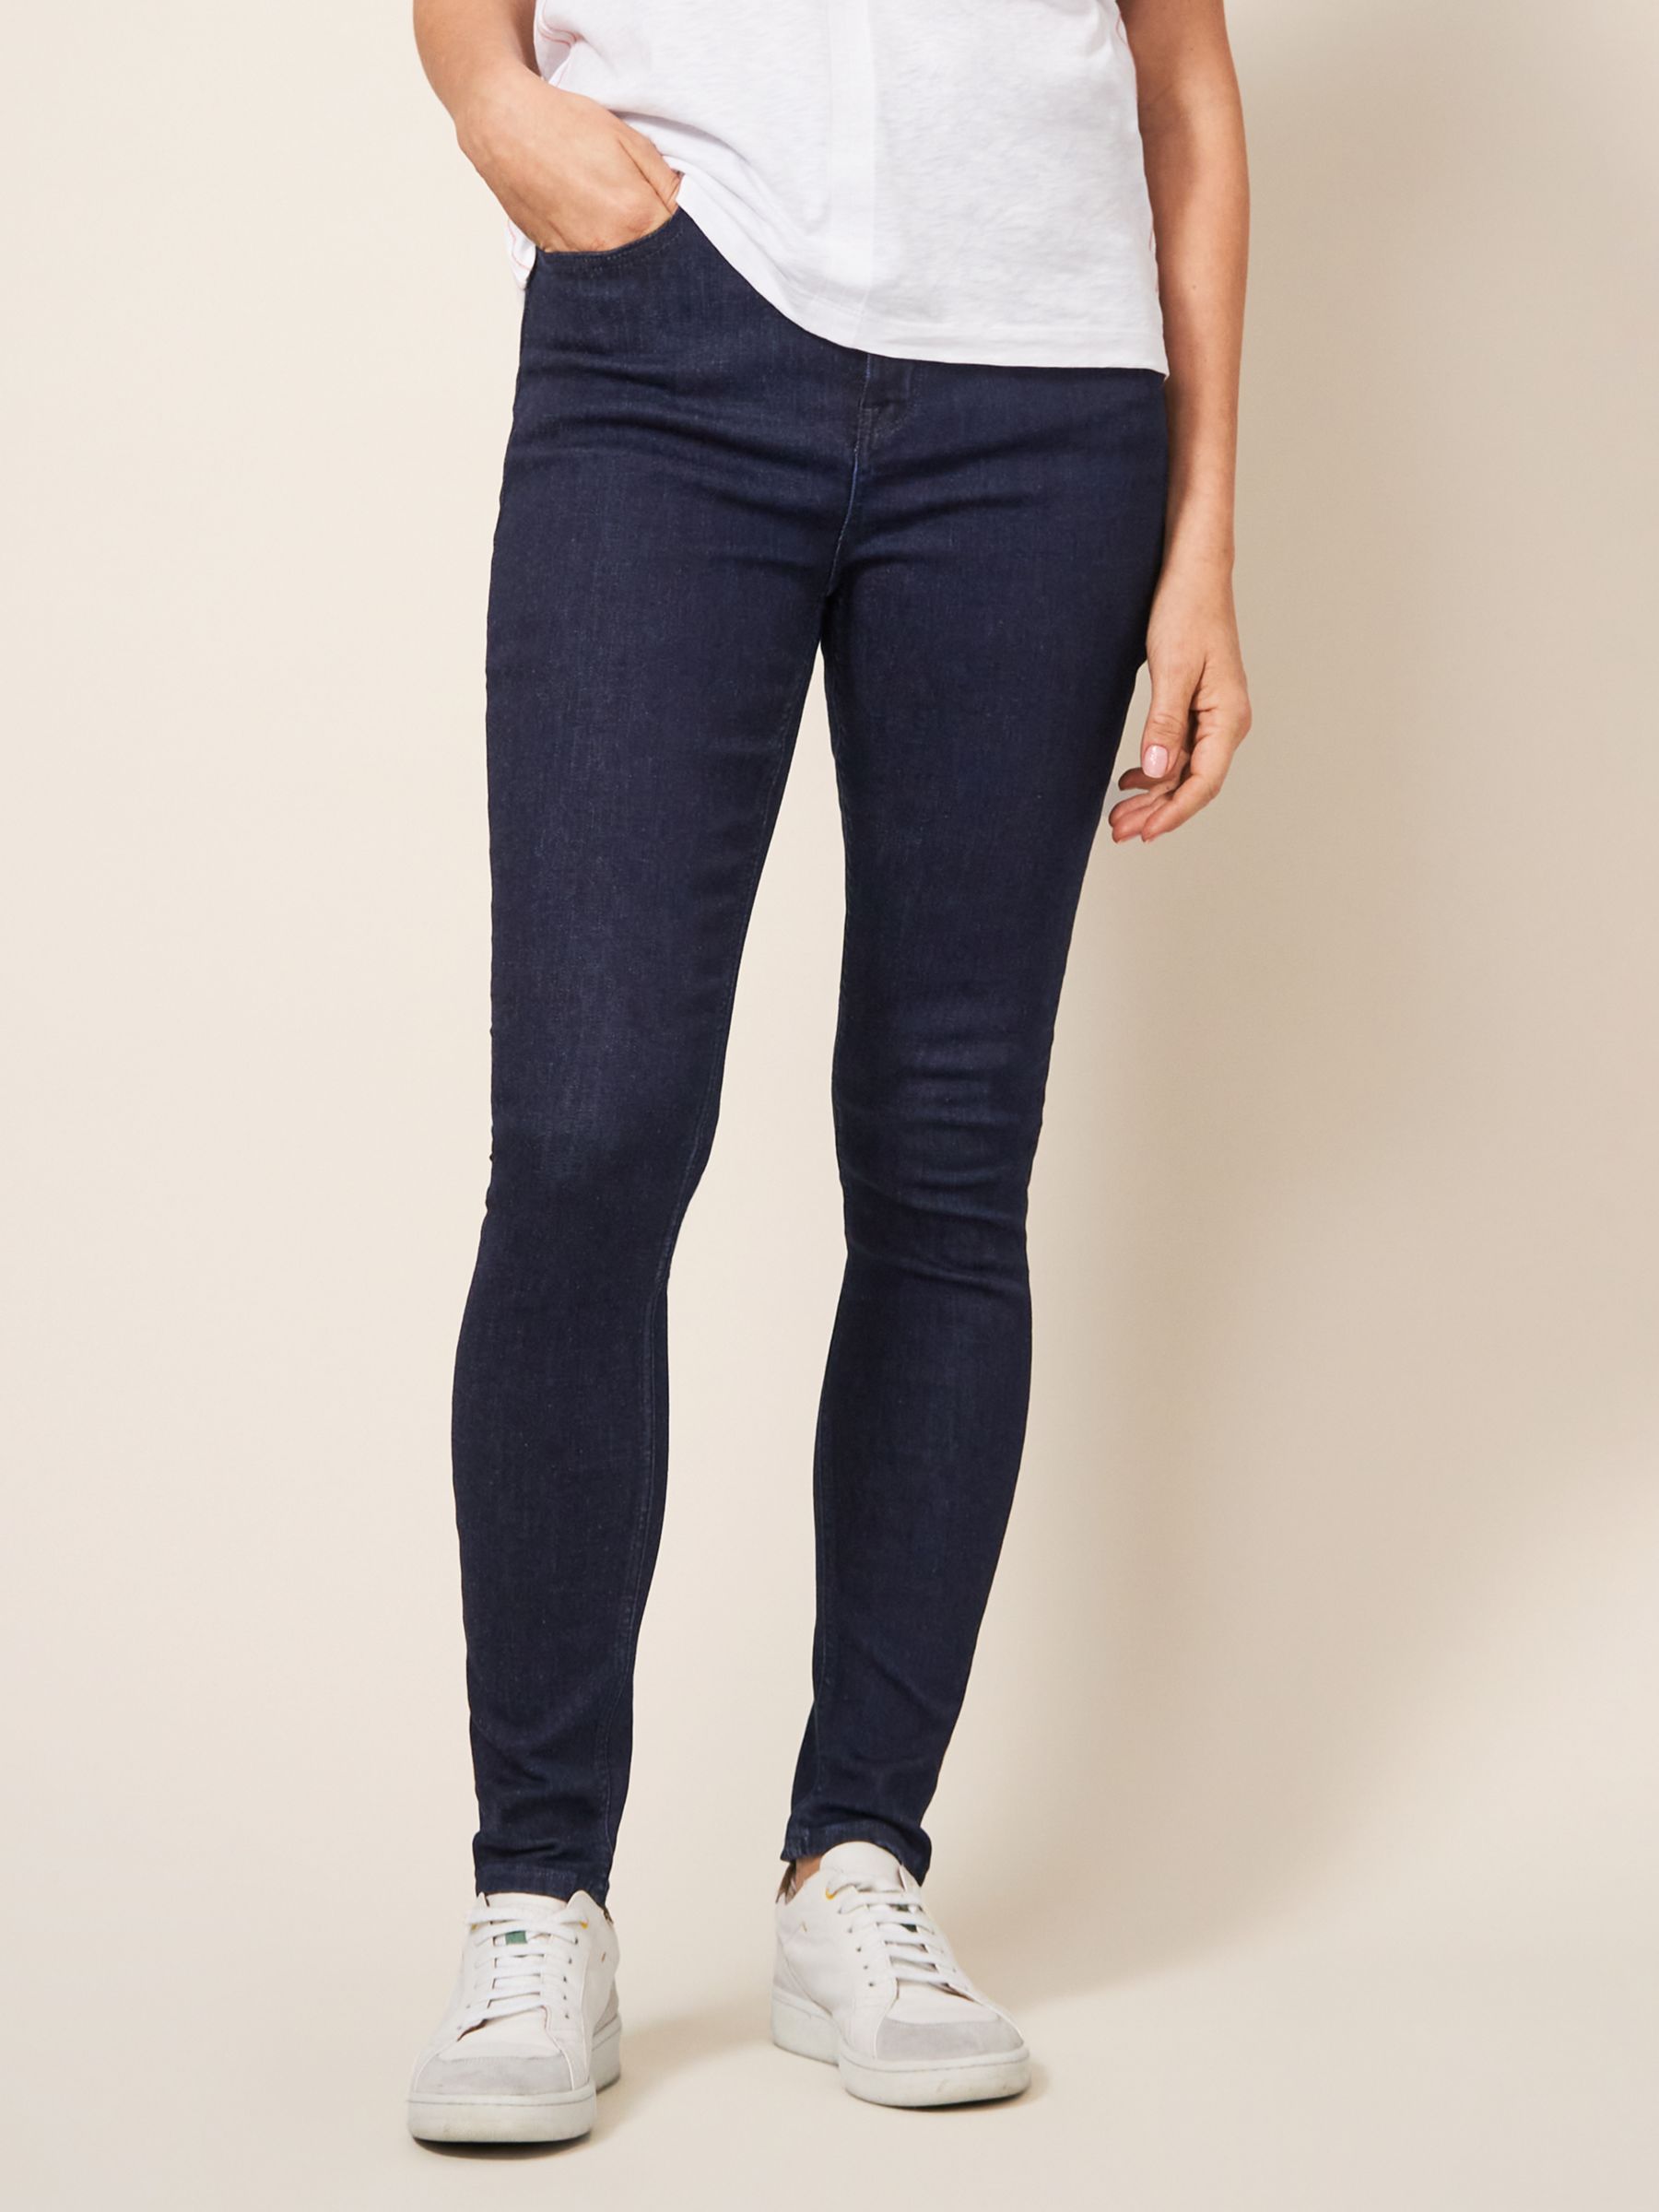 White Stuff Amelia Skinny Jeans, Dark Denim, 20L